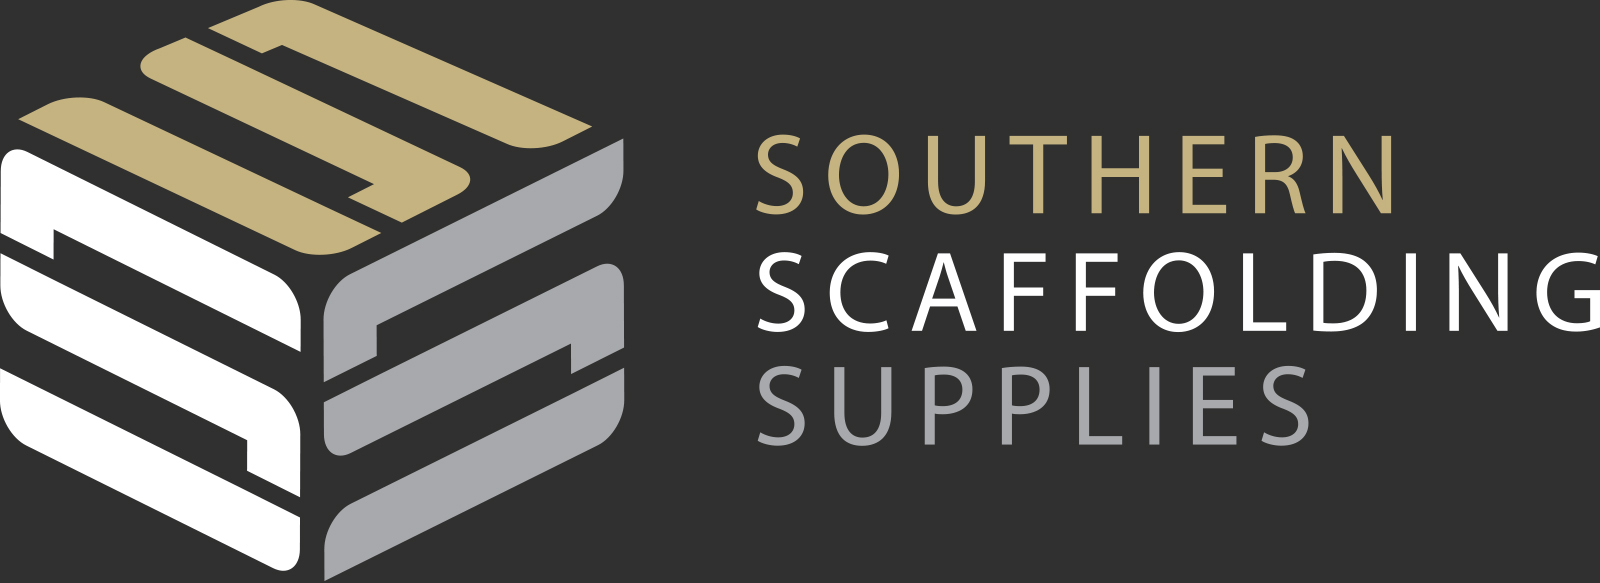 logo for Southern Scaffolding Supplies Ltd